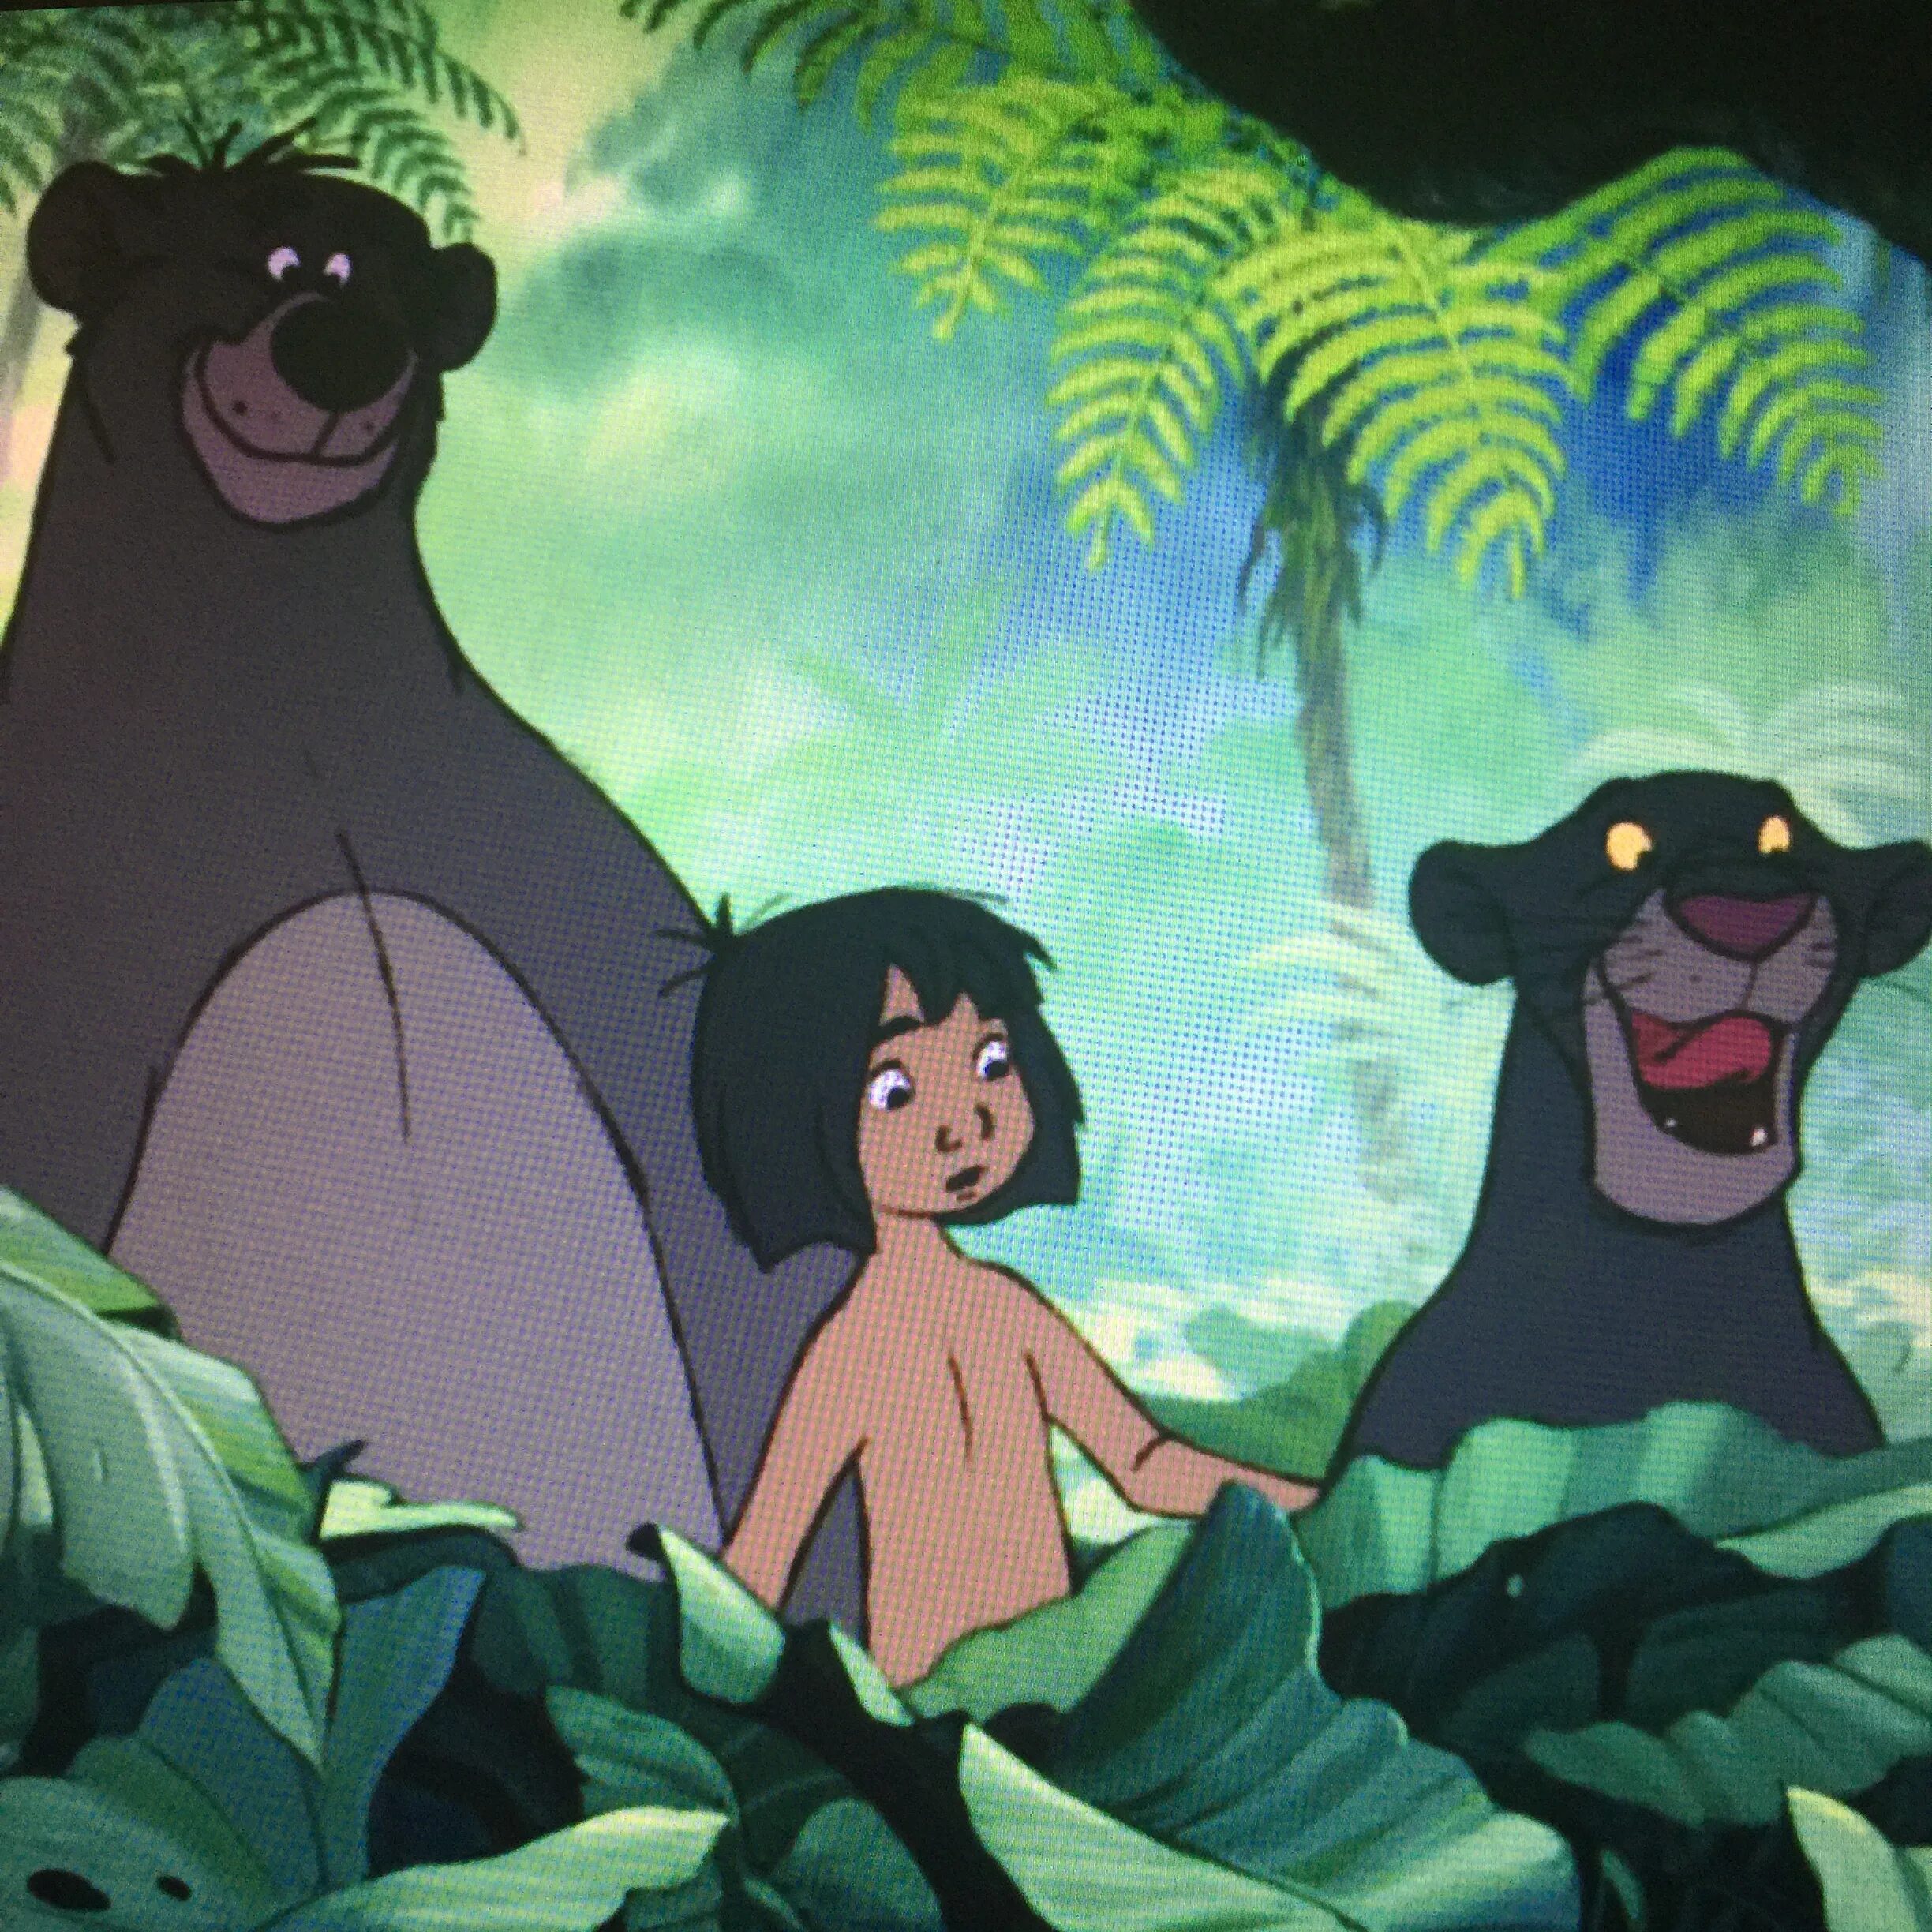 Мои любимые герои мультфильмов шрек пумба маугли. Маугли Дисней 1967. Маугли балу и Багира.